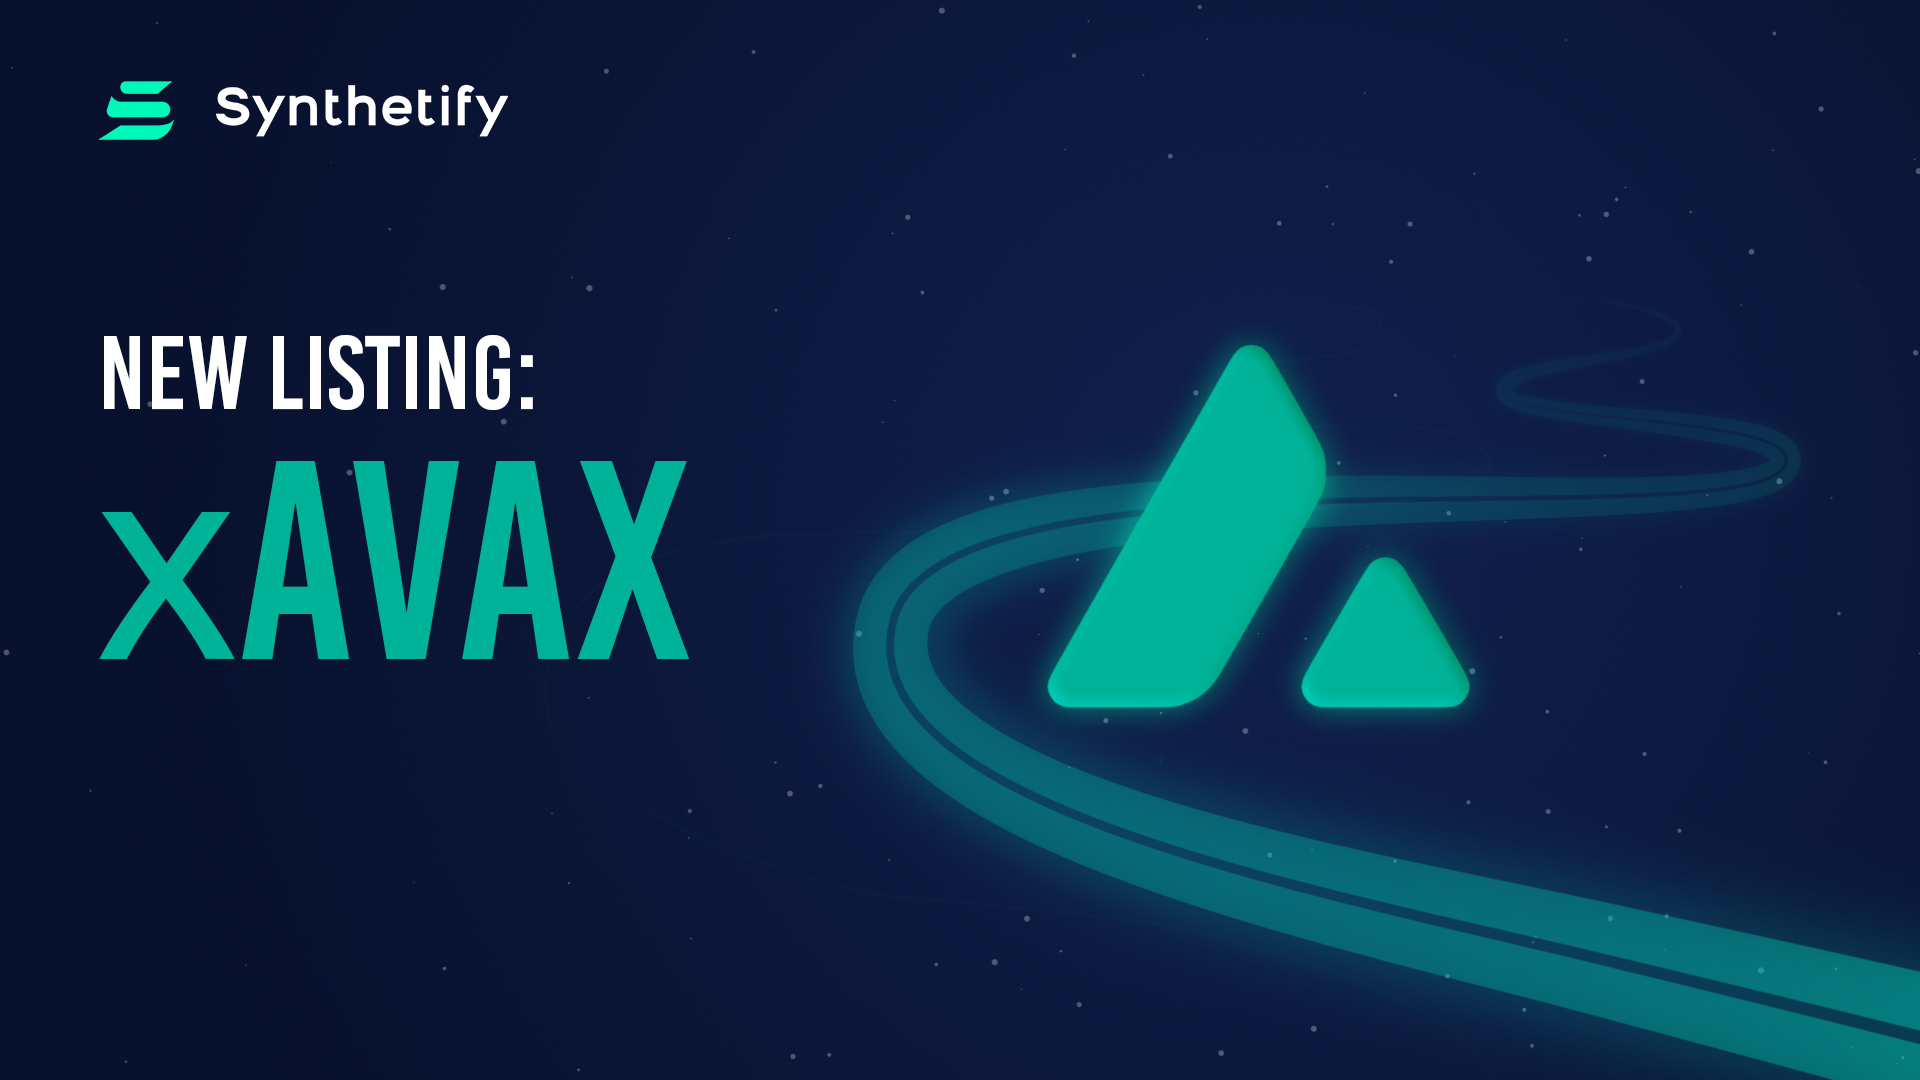 xAVAX is now available